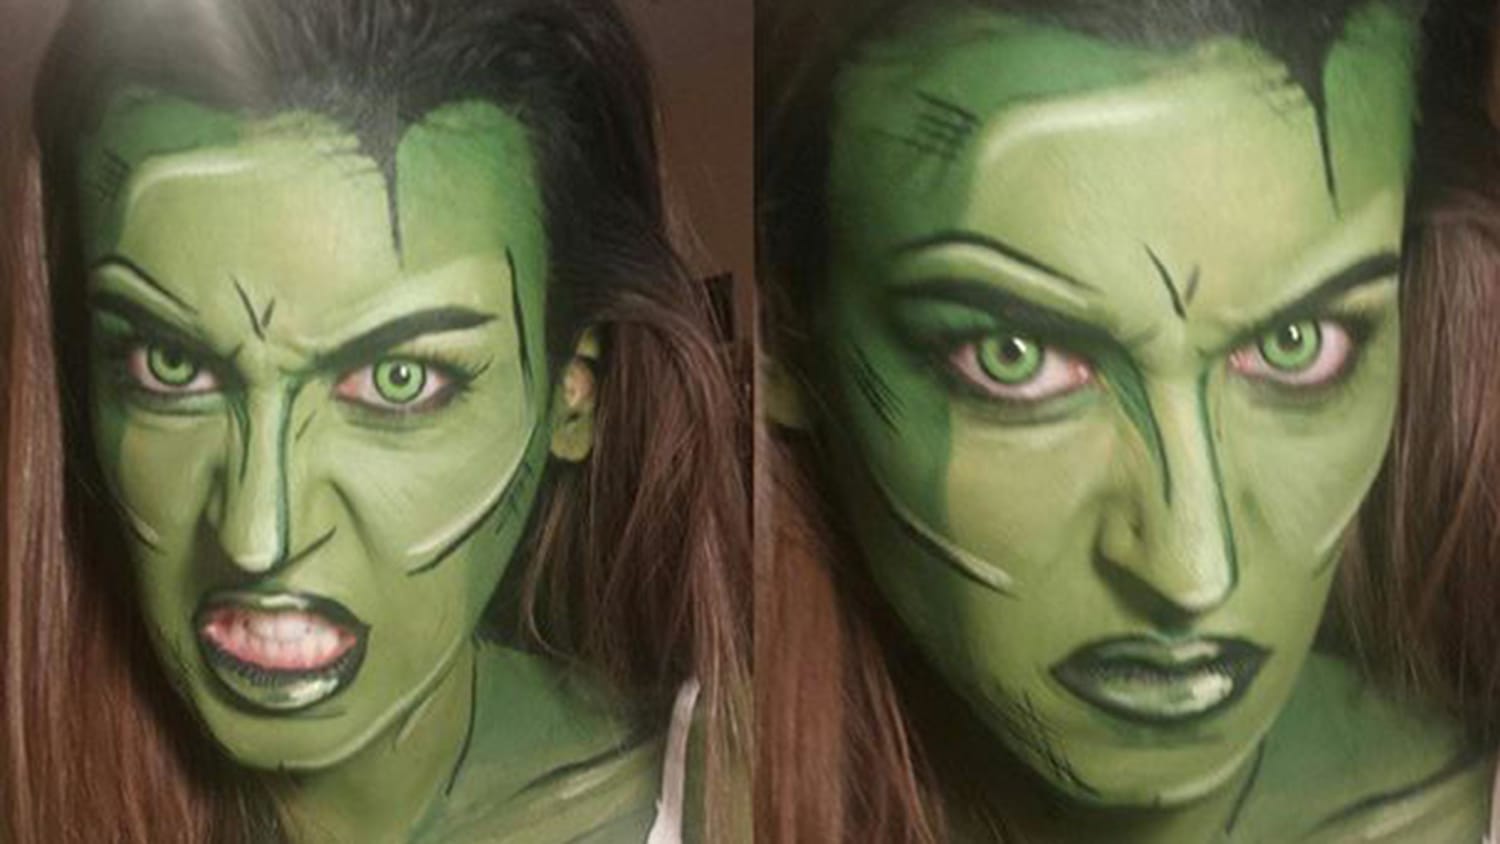 hulk face paint